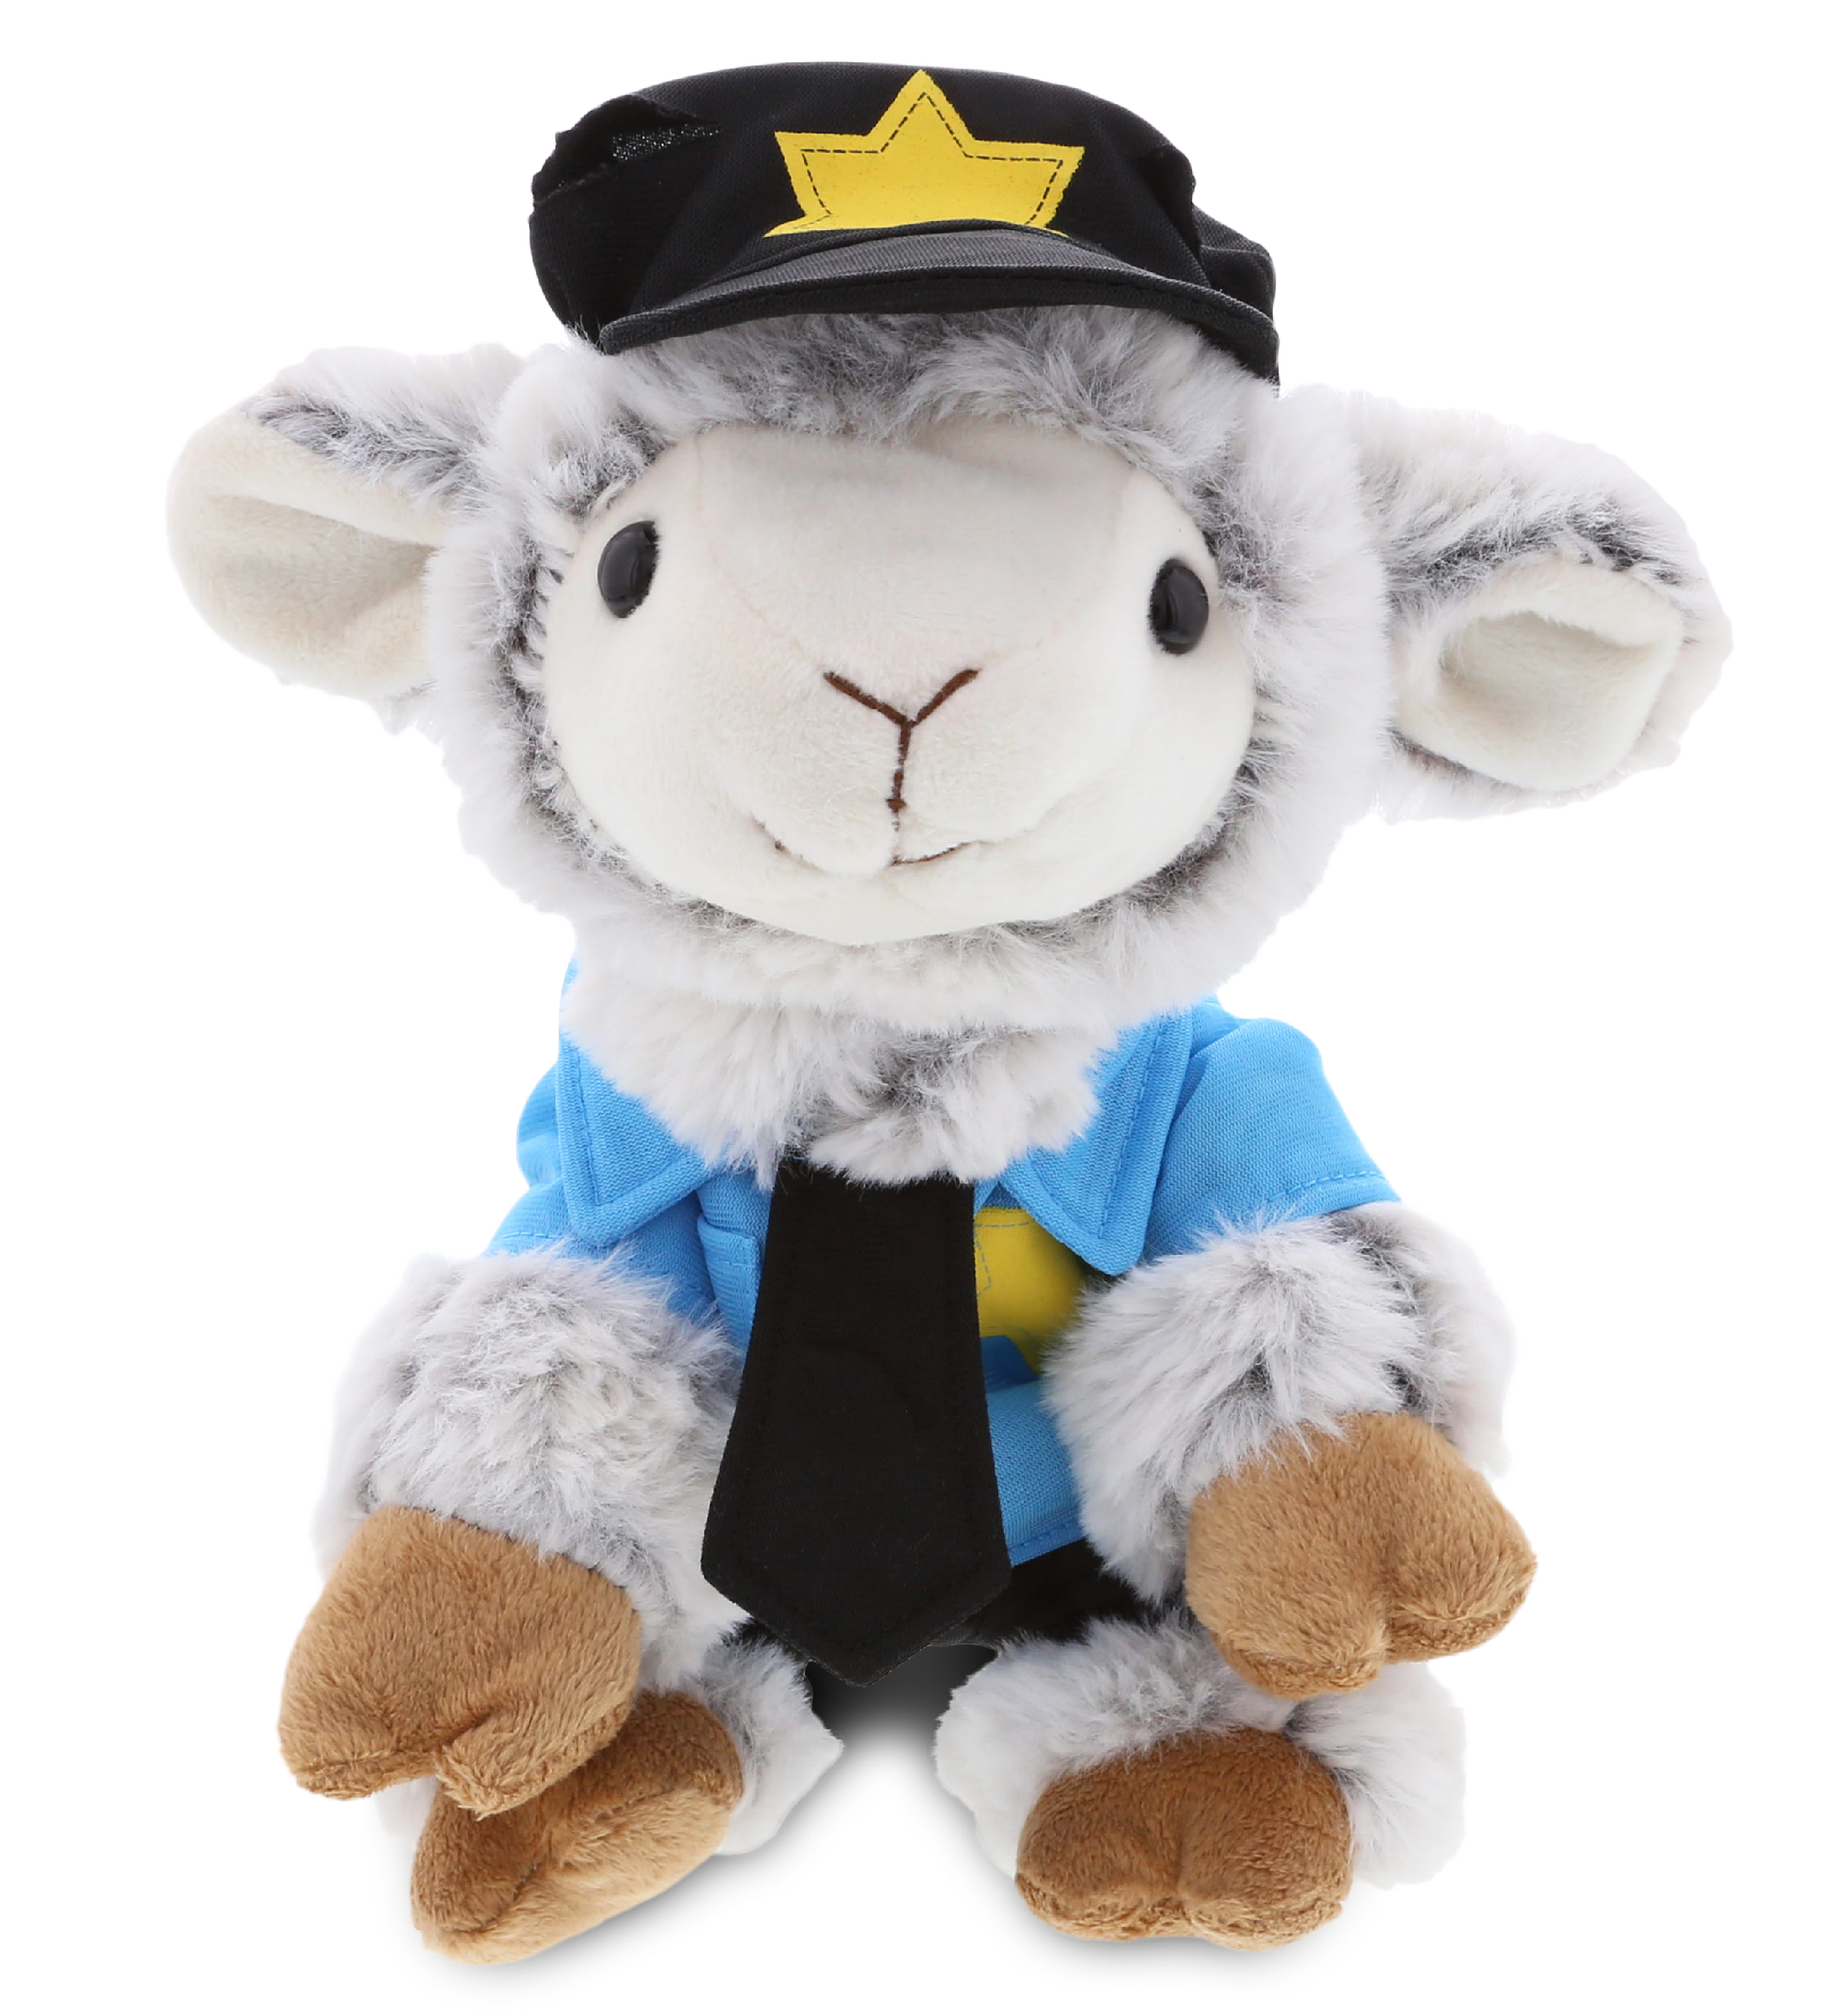 DolliBu Squat Sheep Police Officer Plush Toy – Super Soft Squat Sheep Cop  Stuffed Animal Dress Up with Cute Cop Uniform & Cap Outfit – 9.5″ Inch -  DolliBu